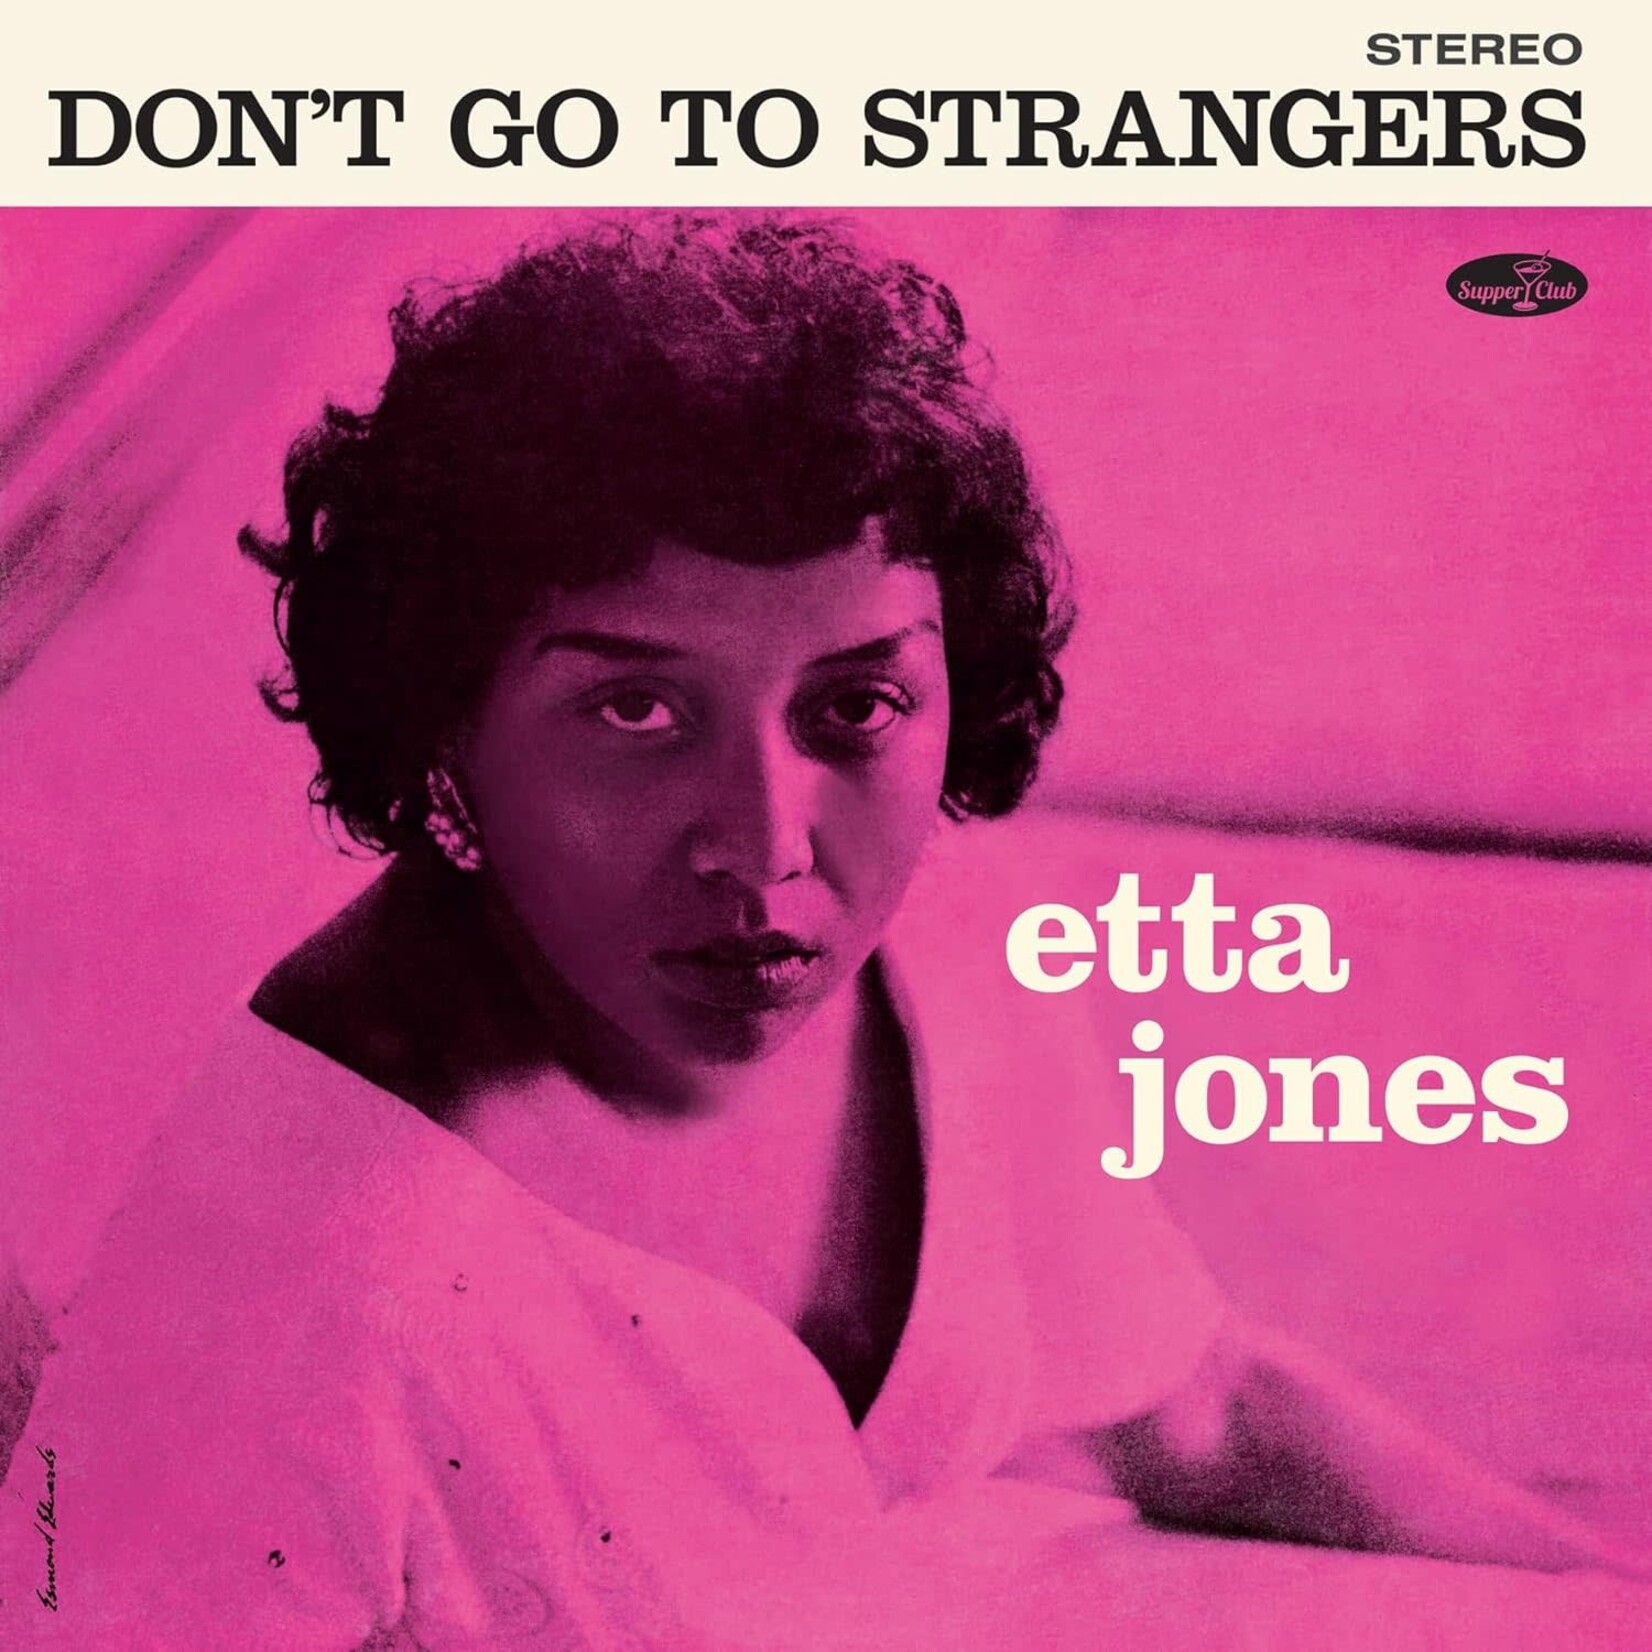 [New] Jones, Etta: Don't Go To Strangers (180g, 3 bonus tracks) [SUPPER CLUB]